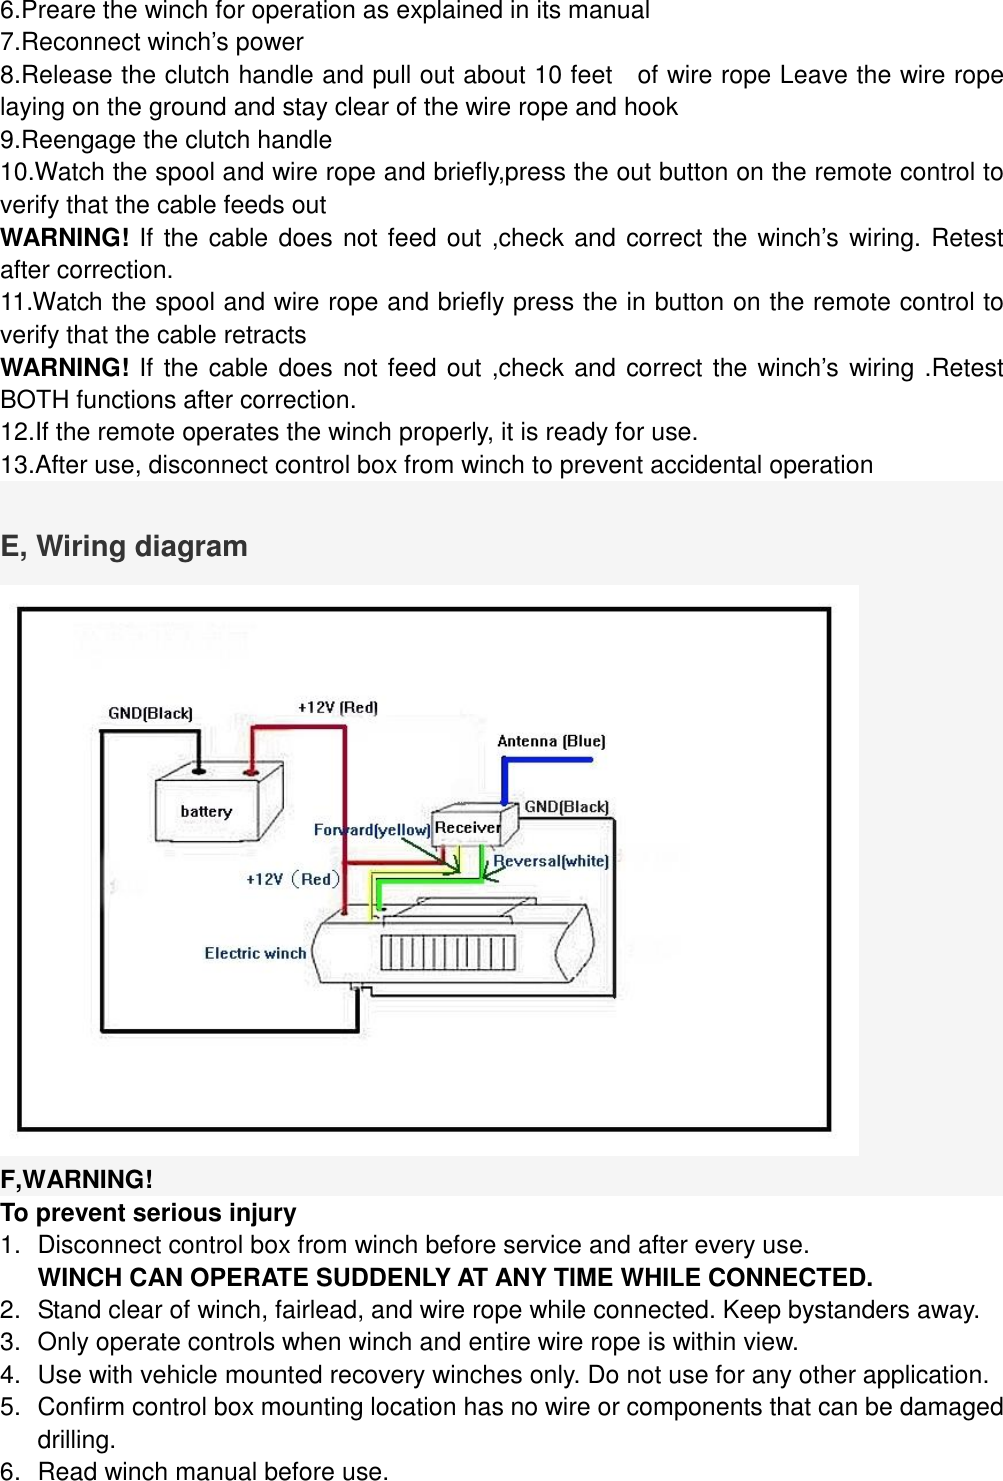 Ningbo Chima wh CM-NRC Electric Winch Wireless Controller User Manual  12v Electric Winch Wiring Diagram    UserManual.wiki